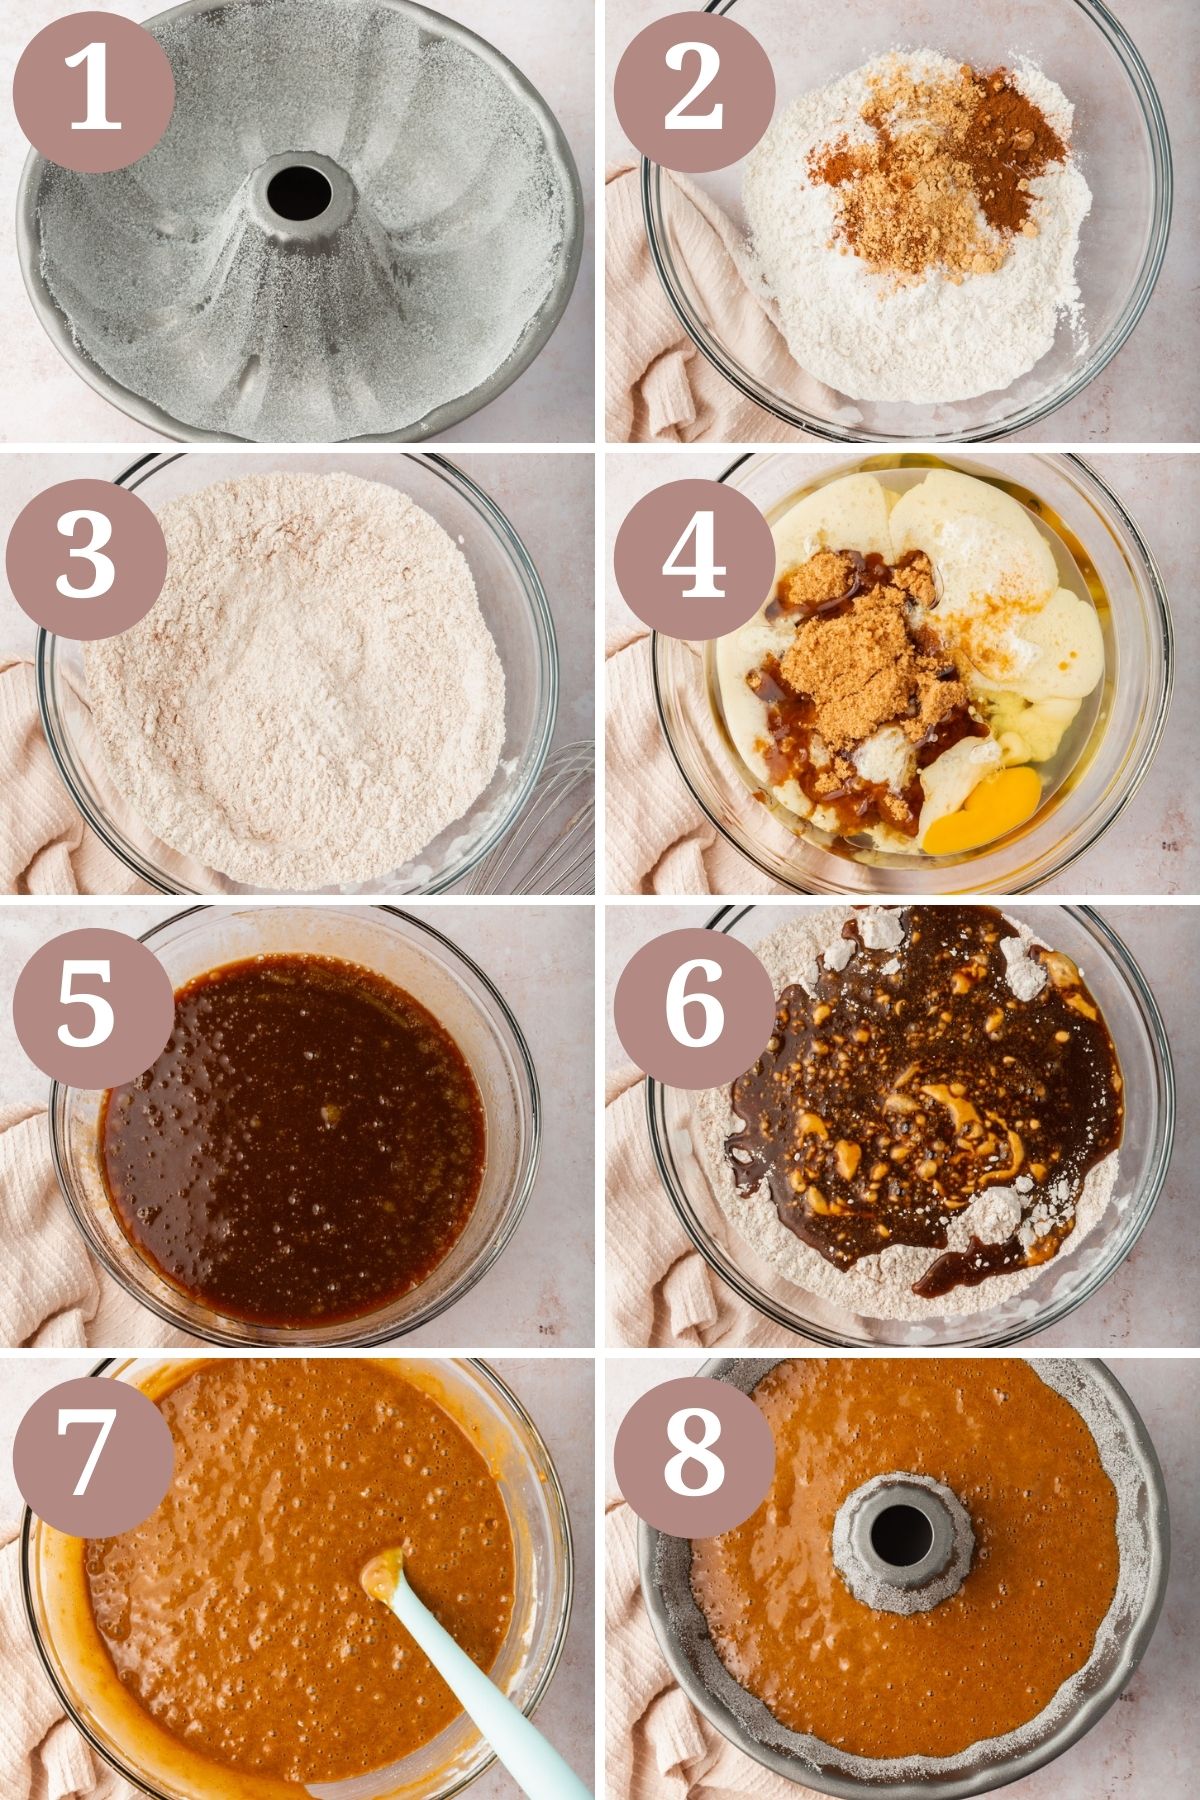 Steps 1-8 for making gluten-free gingerbread bundt cake.